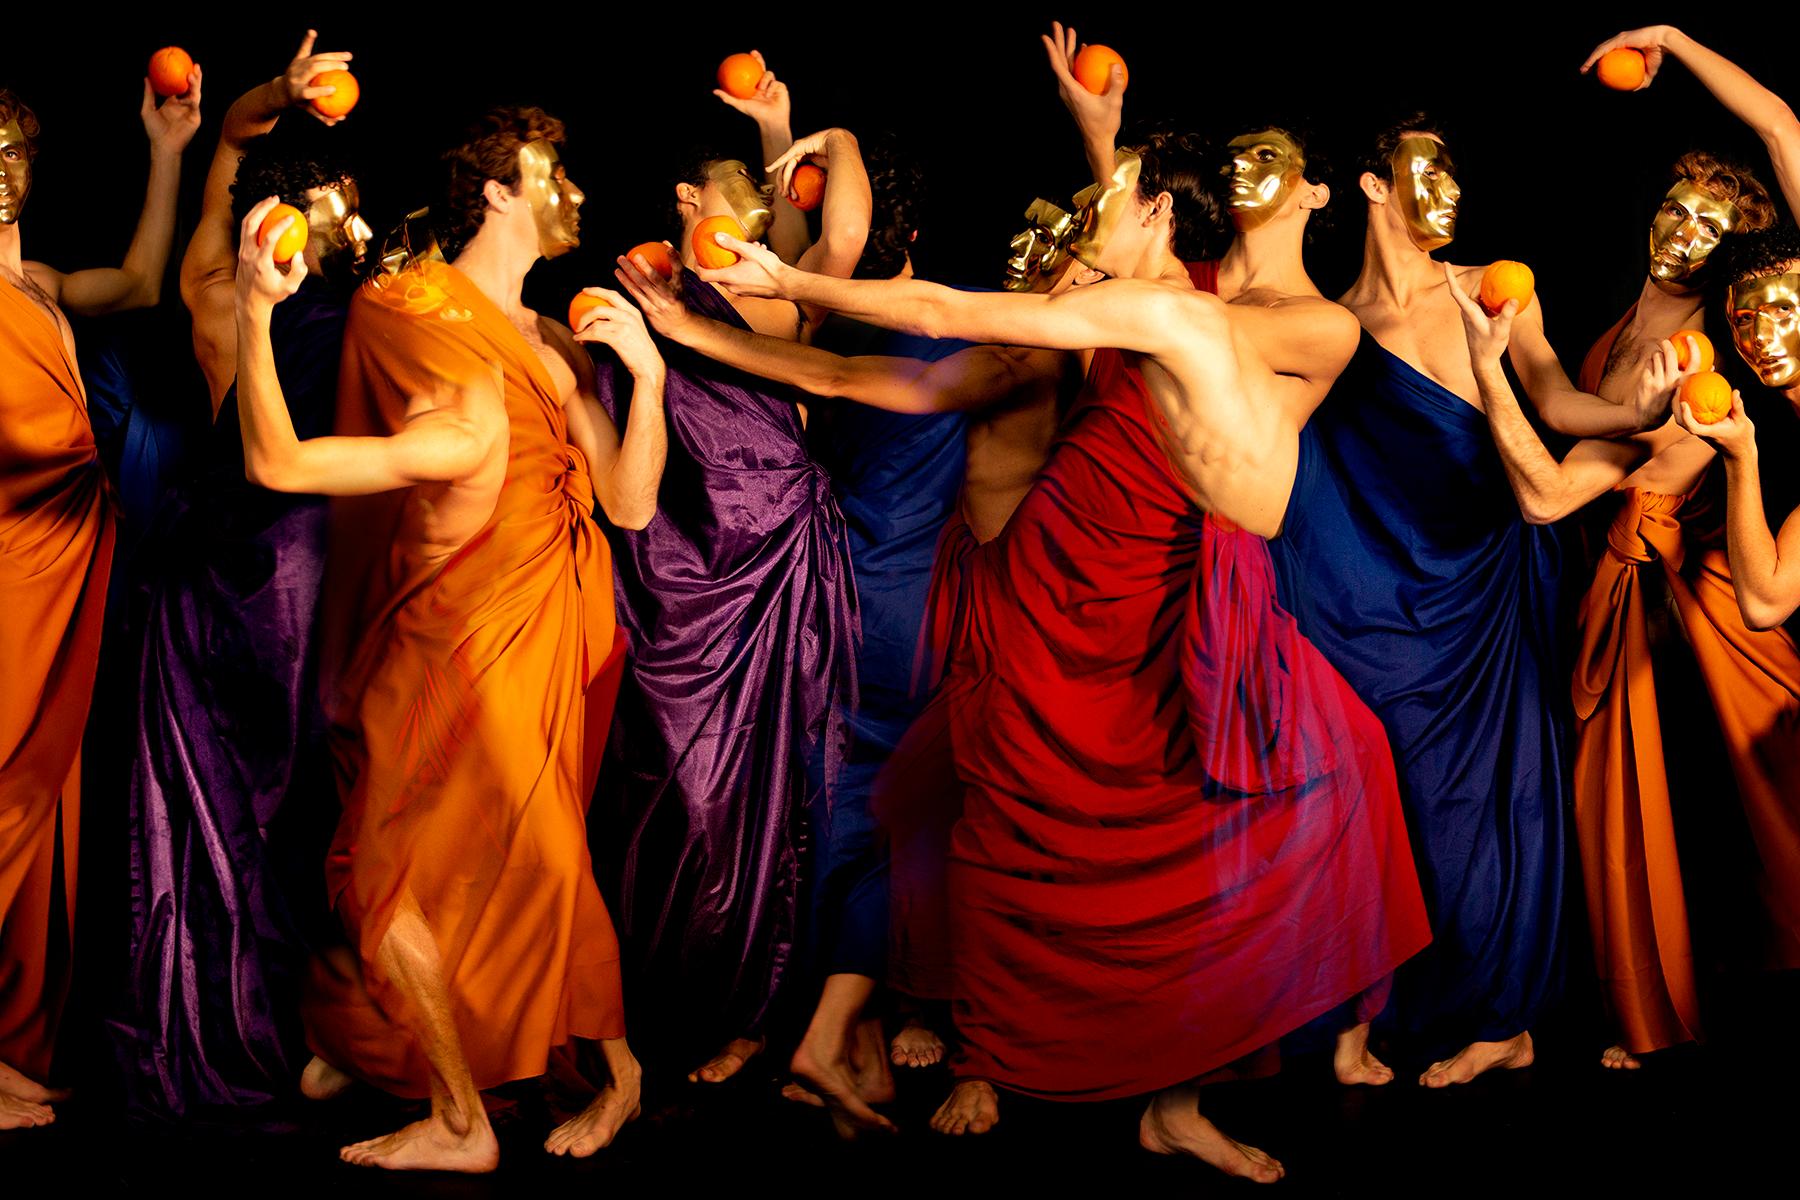 Ricky Cohete Color Photograph - Cuatro. From The series danza de las naranjas. Figurative color photograph